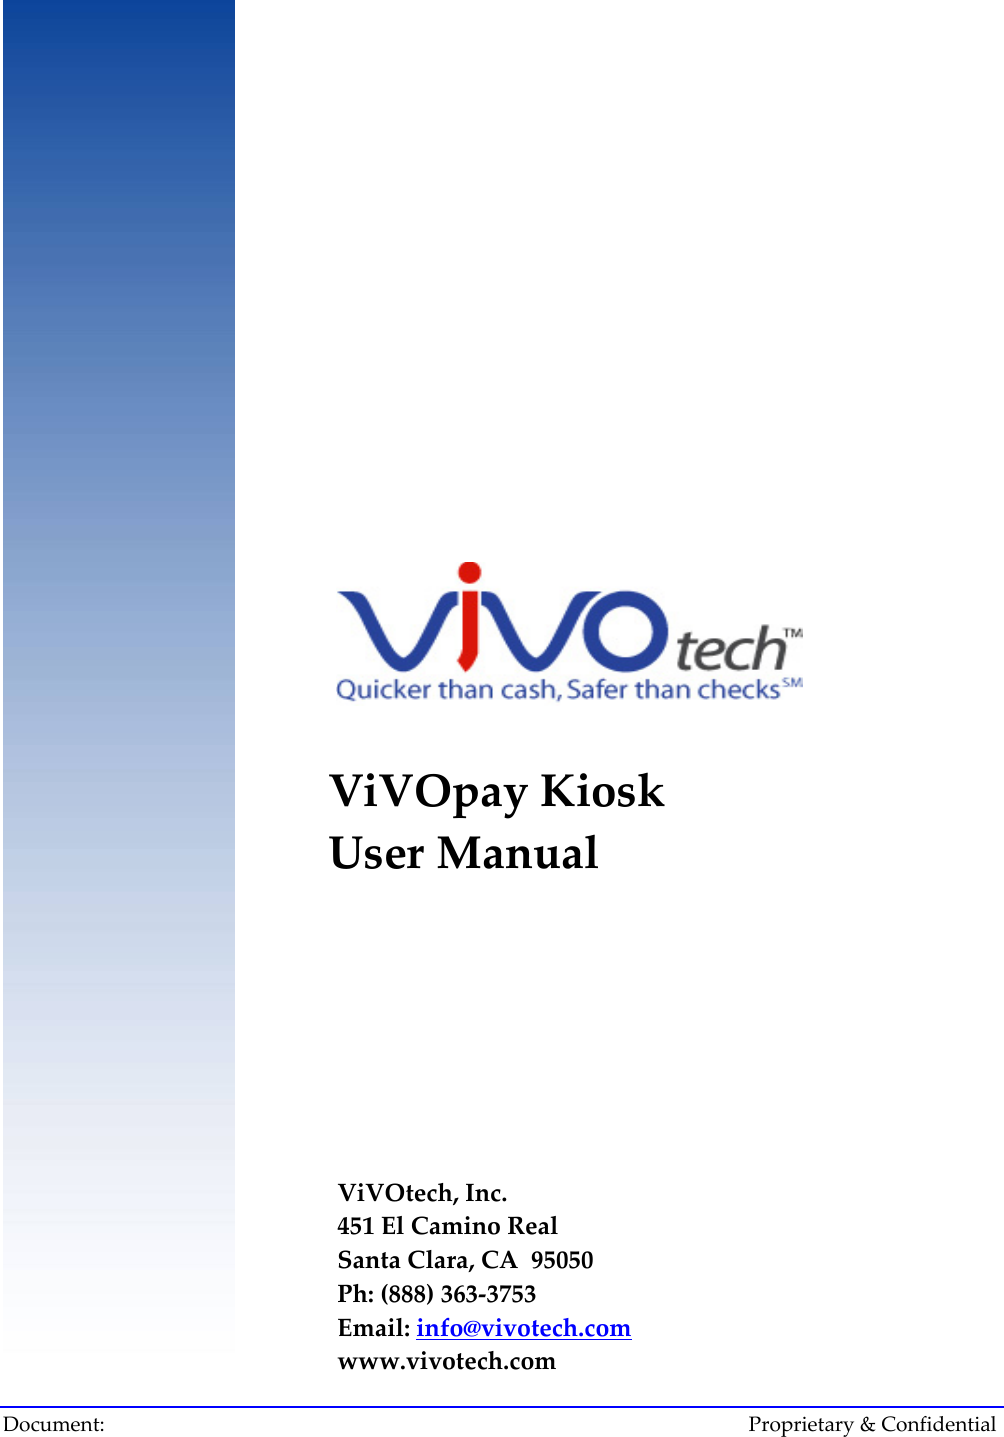                     ViVOpay Kiosk    User Manual          ViVOtech, Inc. 451 El Camino Real Santa Clara, CA  95050 Ph: (888) 363-3753 Email: info@vivotech.comwww.vivotech.comDocument:       &amp; Confidential    Proprietary